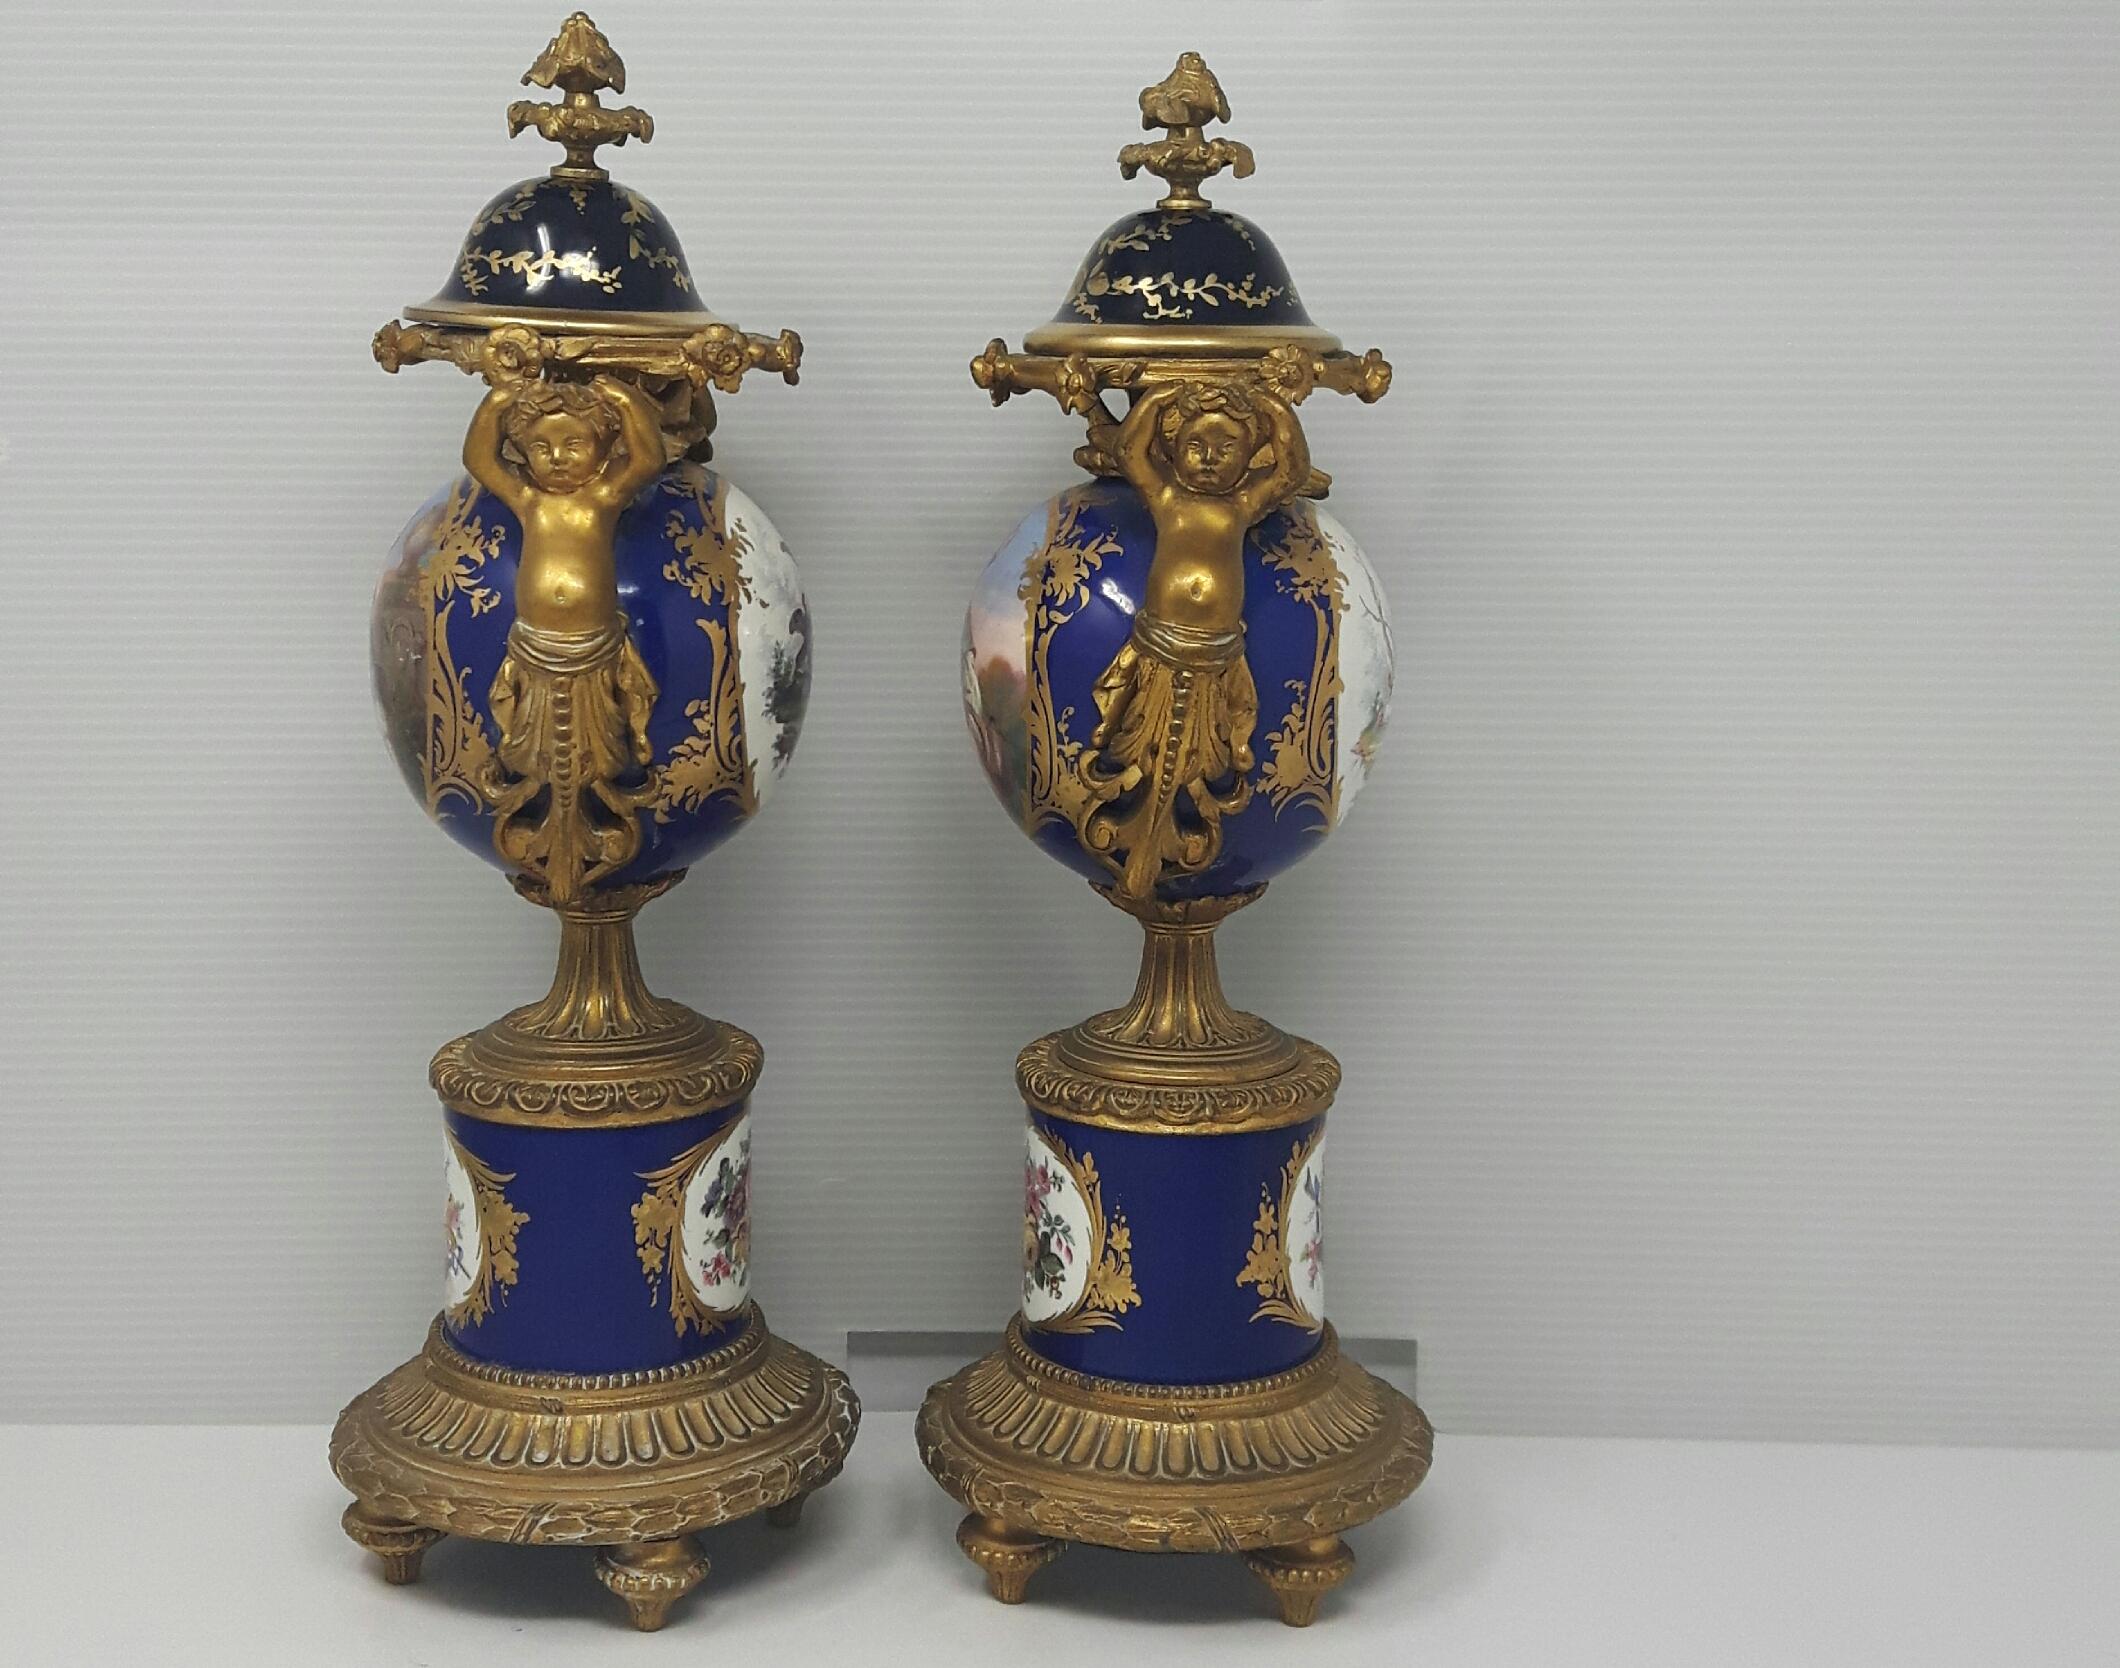 Cast Pair of 19th Century Sèvres-Style Vases